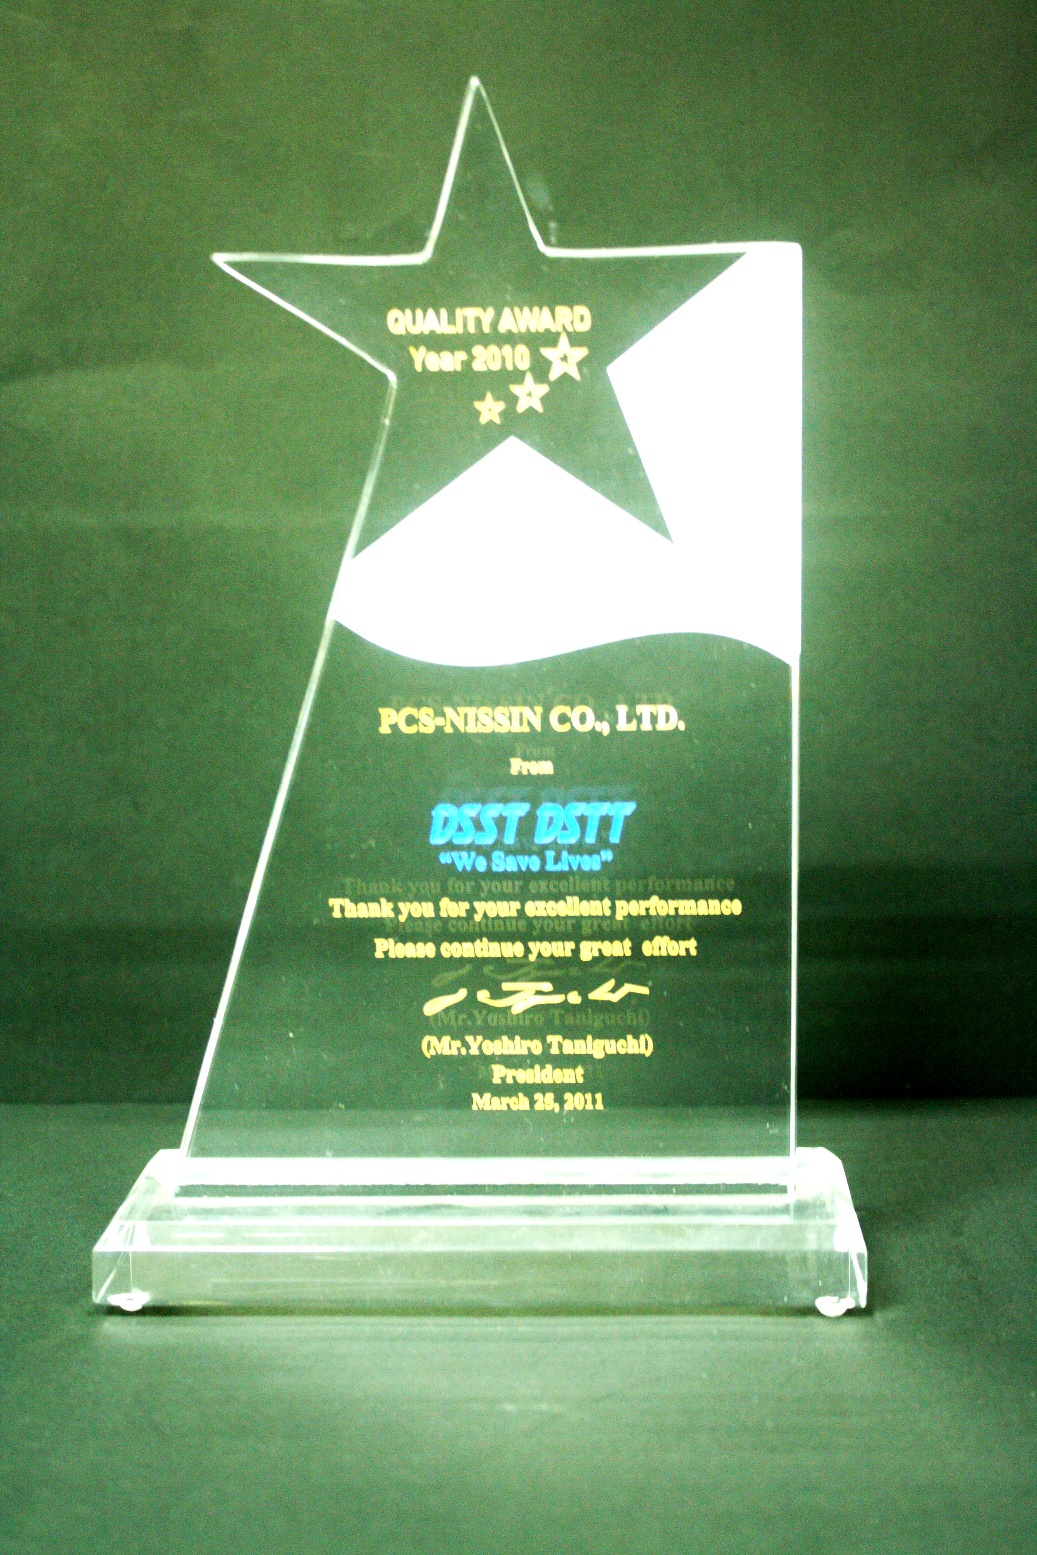 Quality-Award-of-Daicel-Safety-System-2010